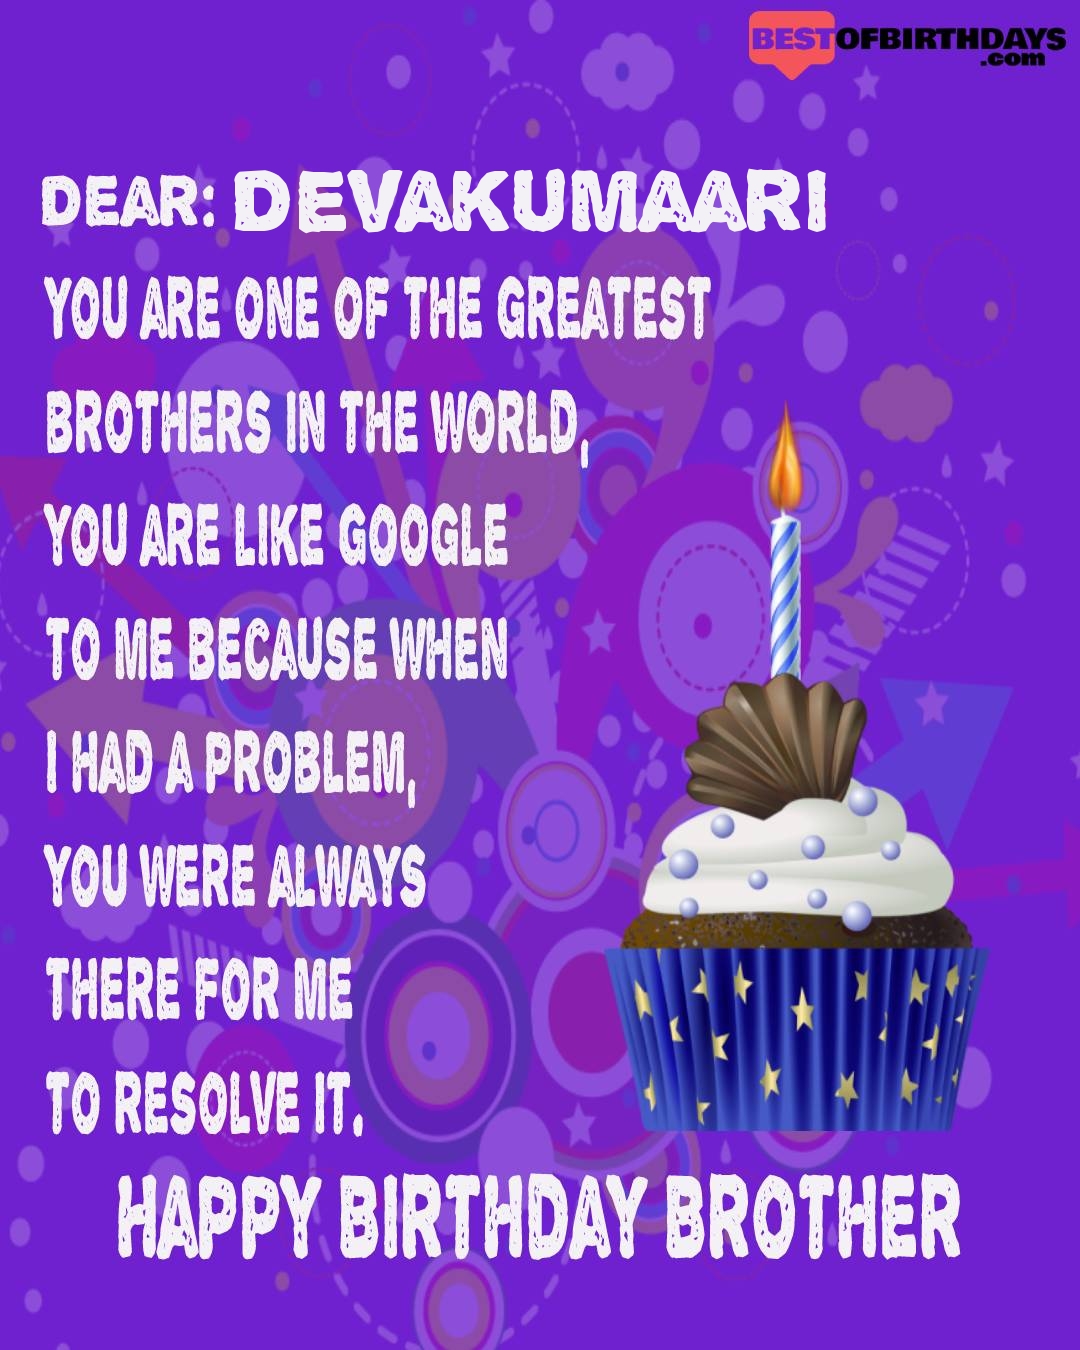 Happy birthday devakumaari bhai brother bro